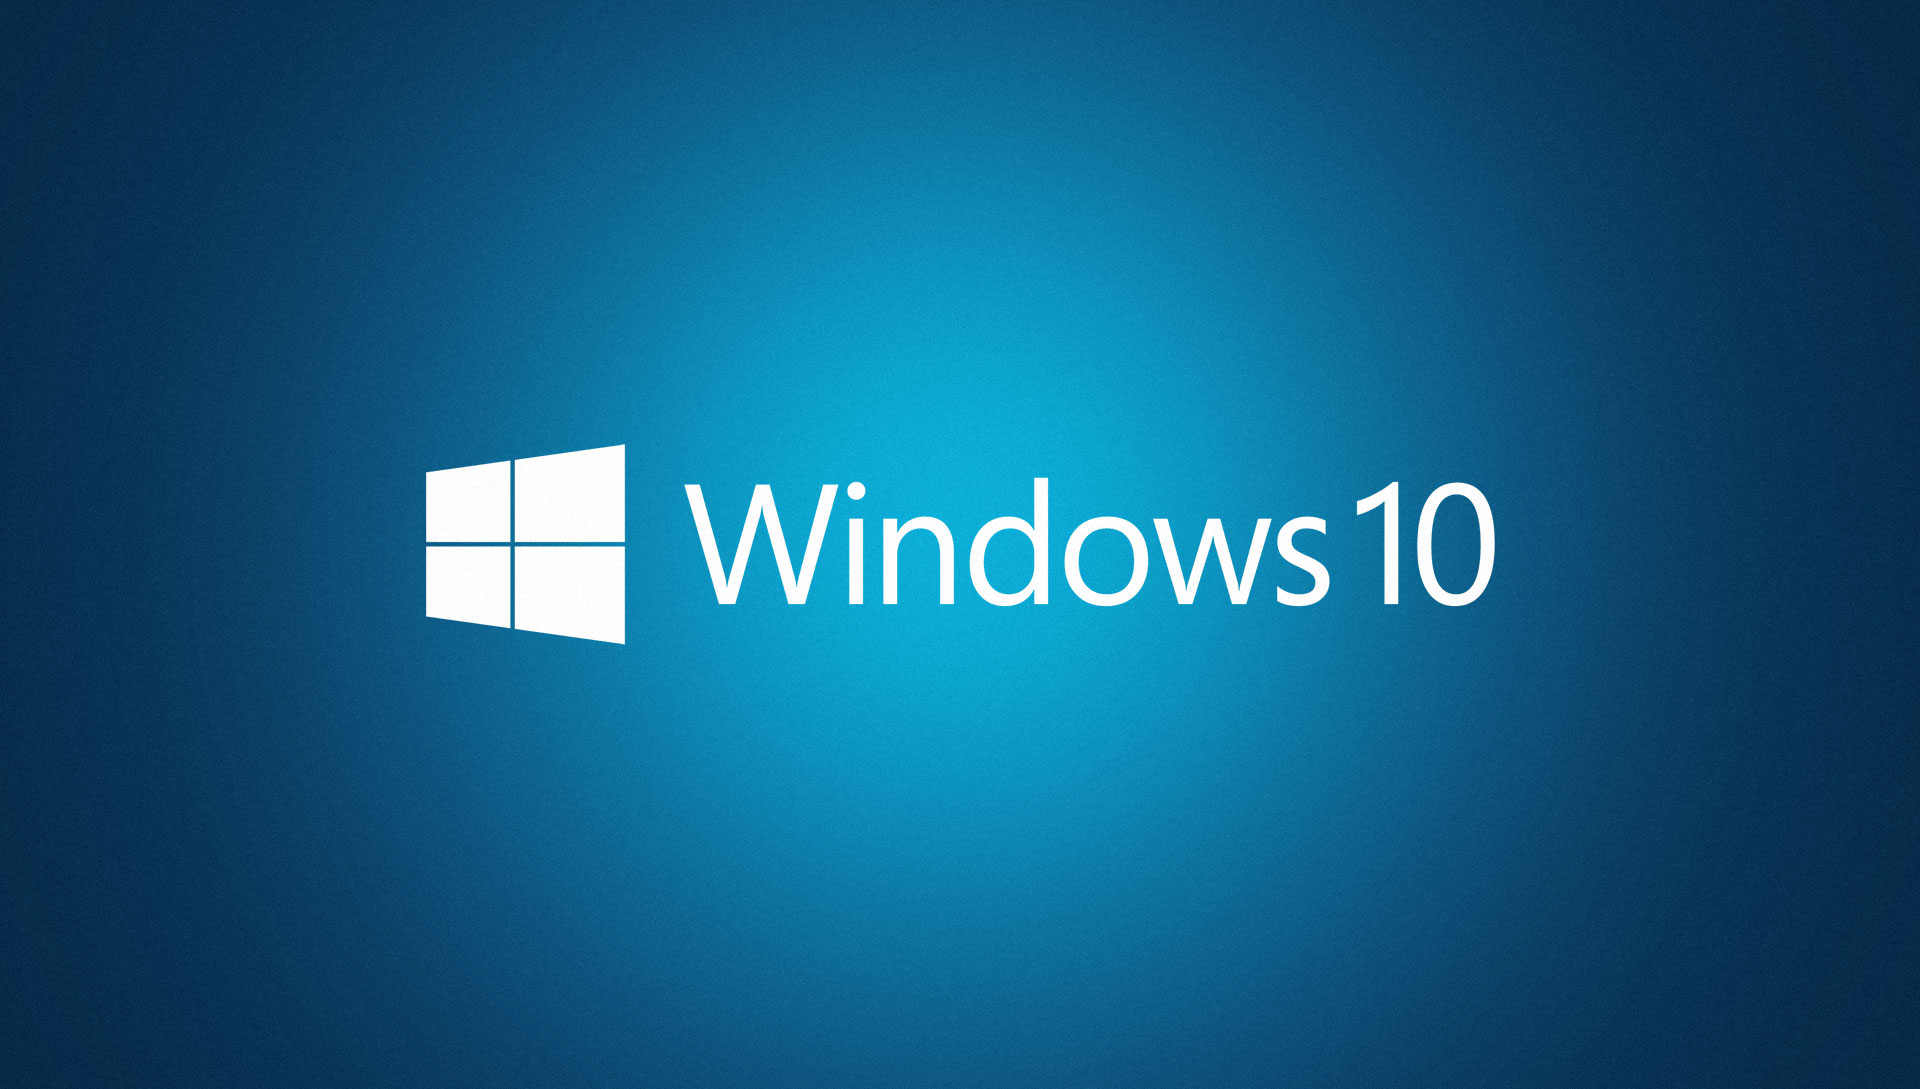 Windows 10 : la fin de support de la version 1903, c'est aujourd'hui